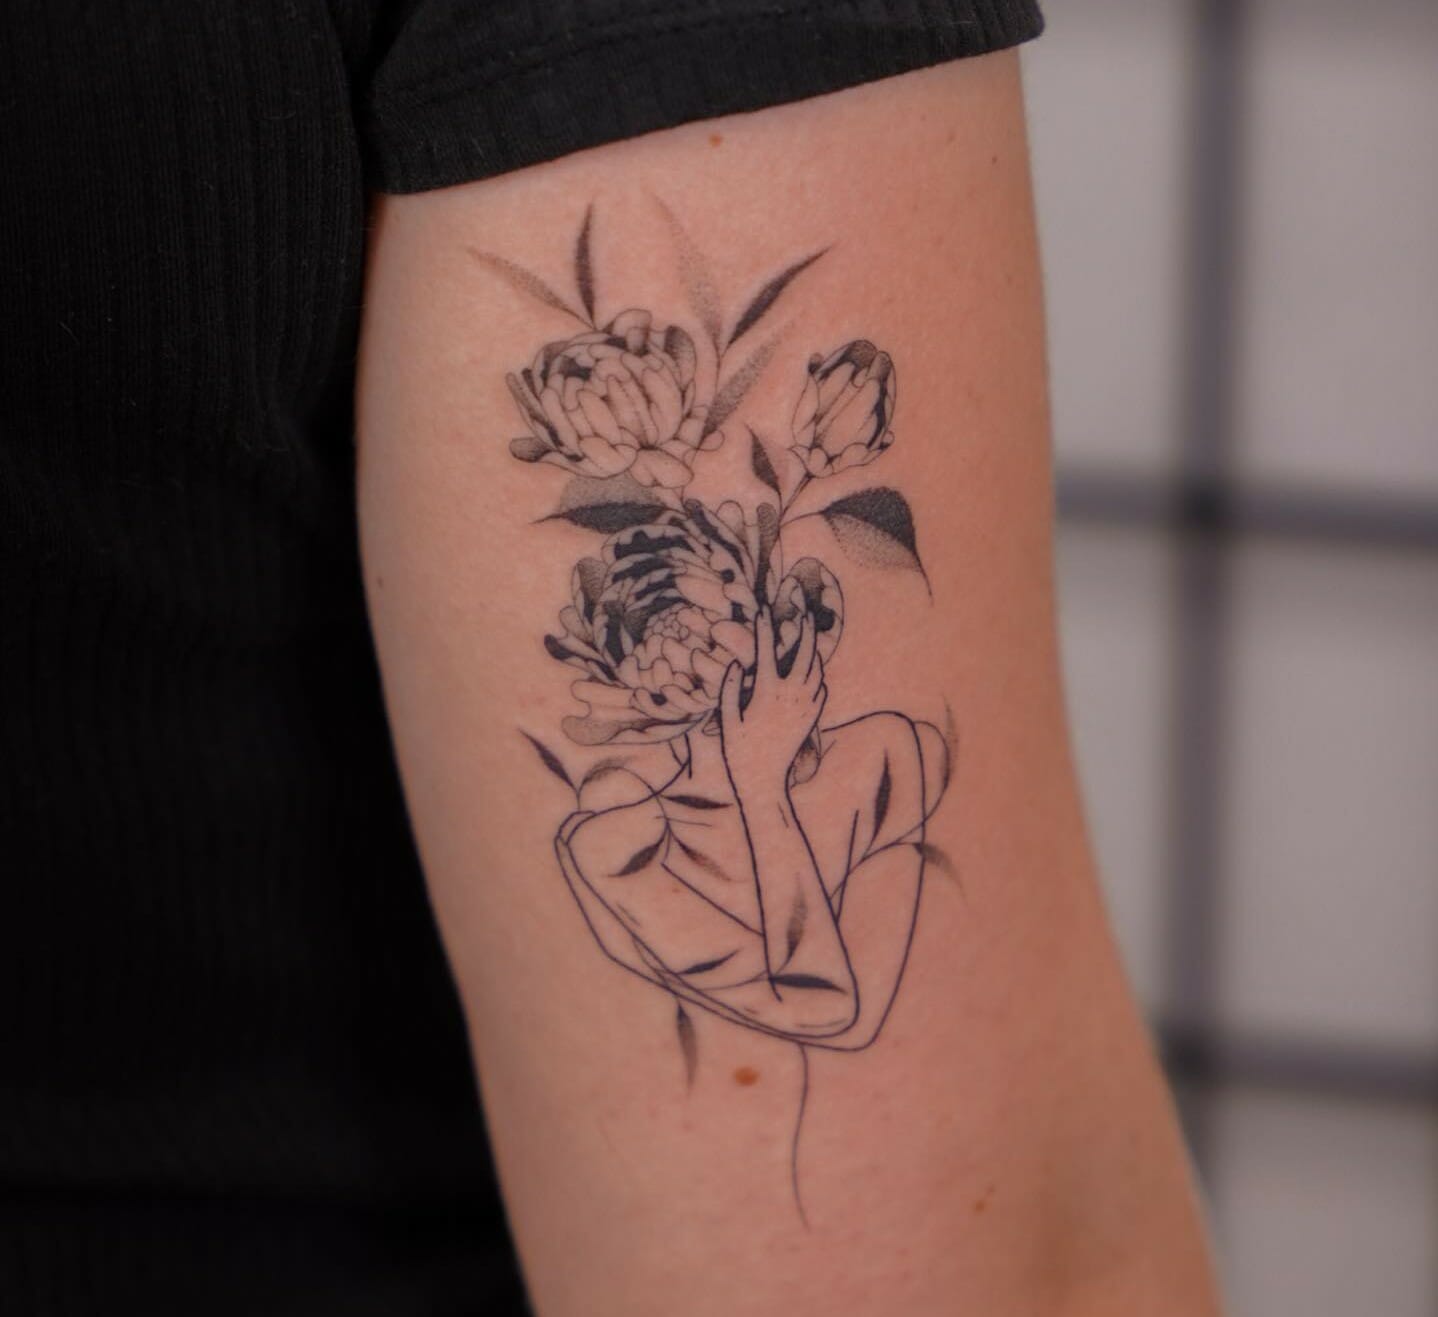 Tattoo Ideas Symbols of Growth Change New Beginnings  TatRing